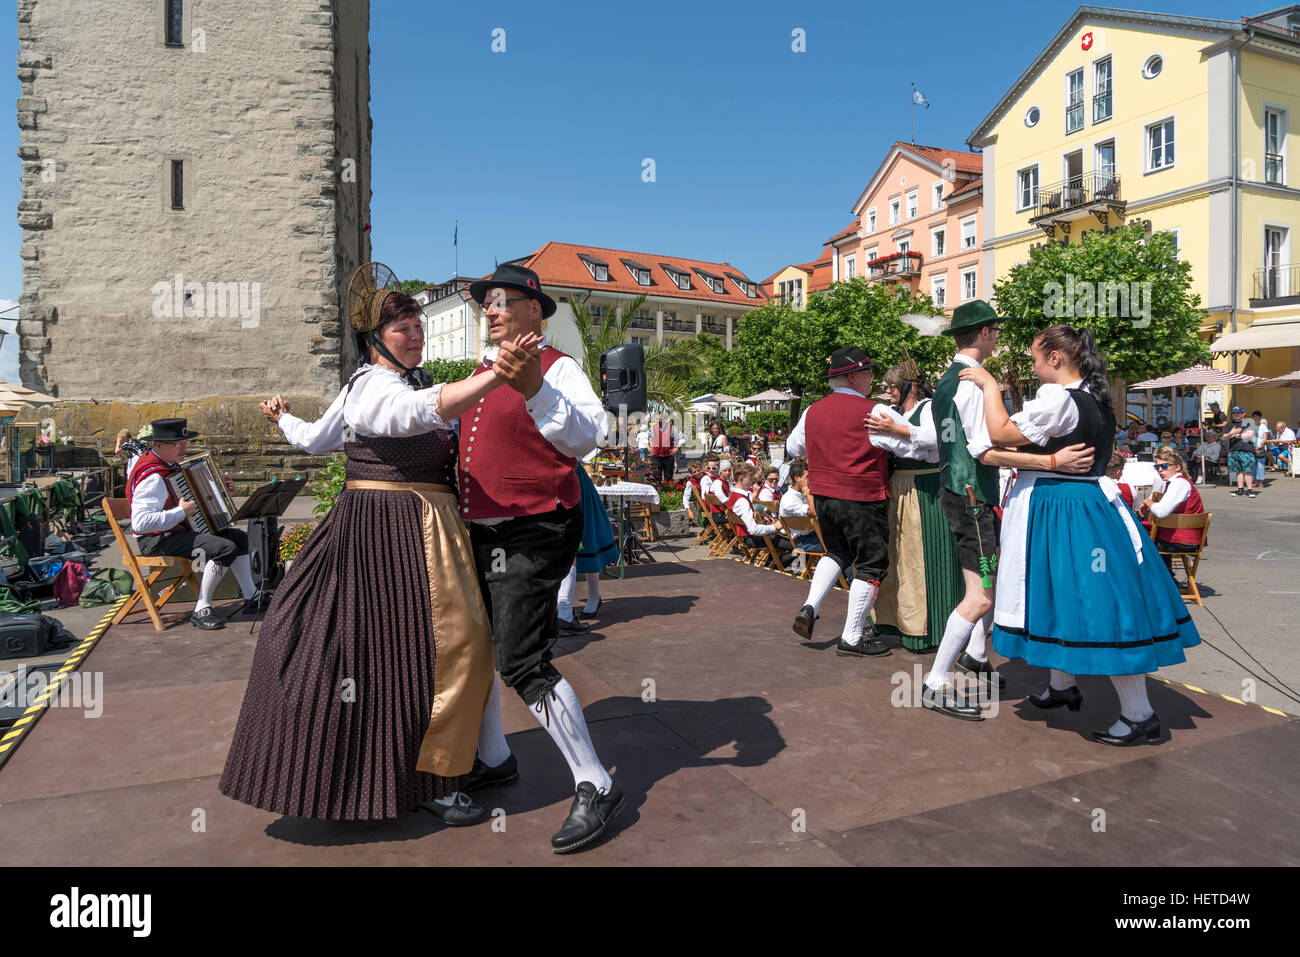 Folk dance group dancing in traditional costumes, Lindau, Lake Constance, Bavaria, Germany, Europe Stock Photo